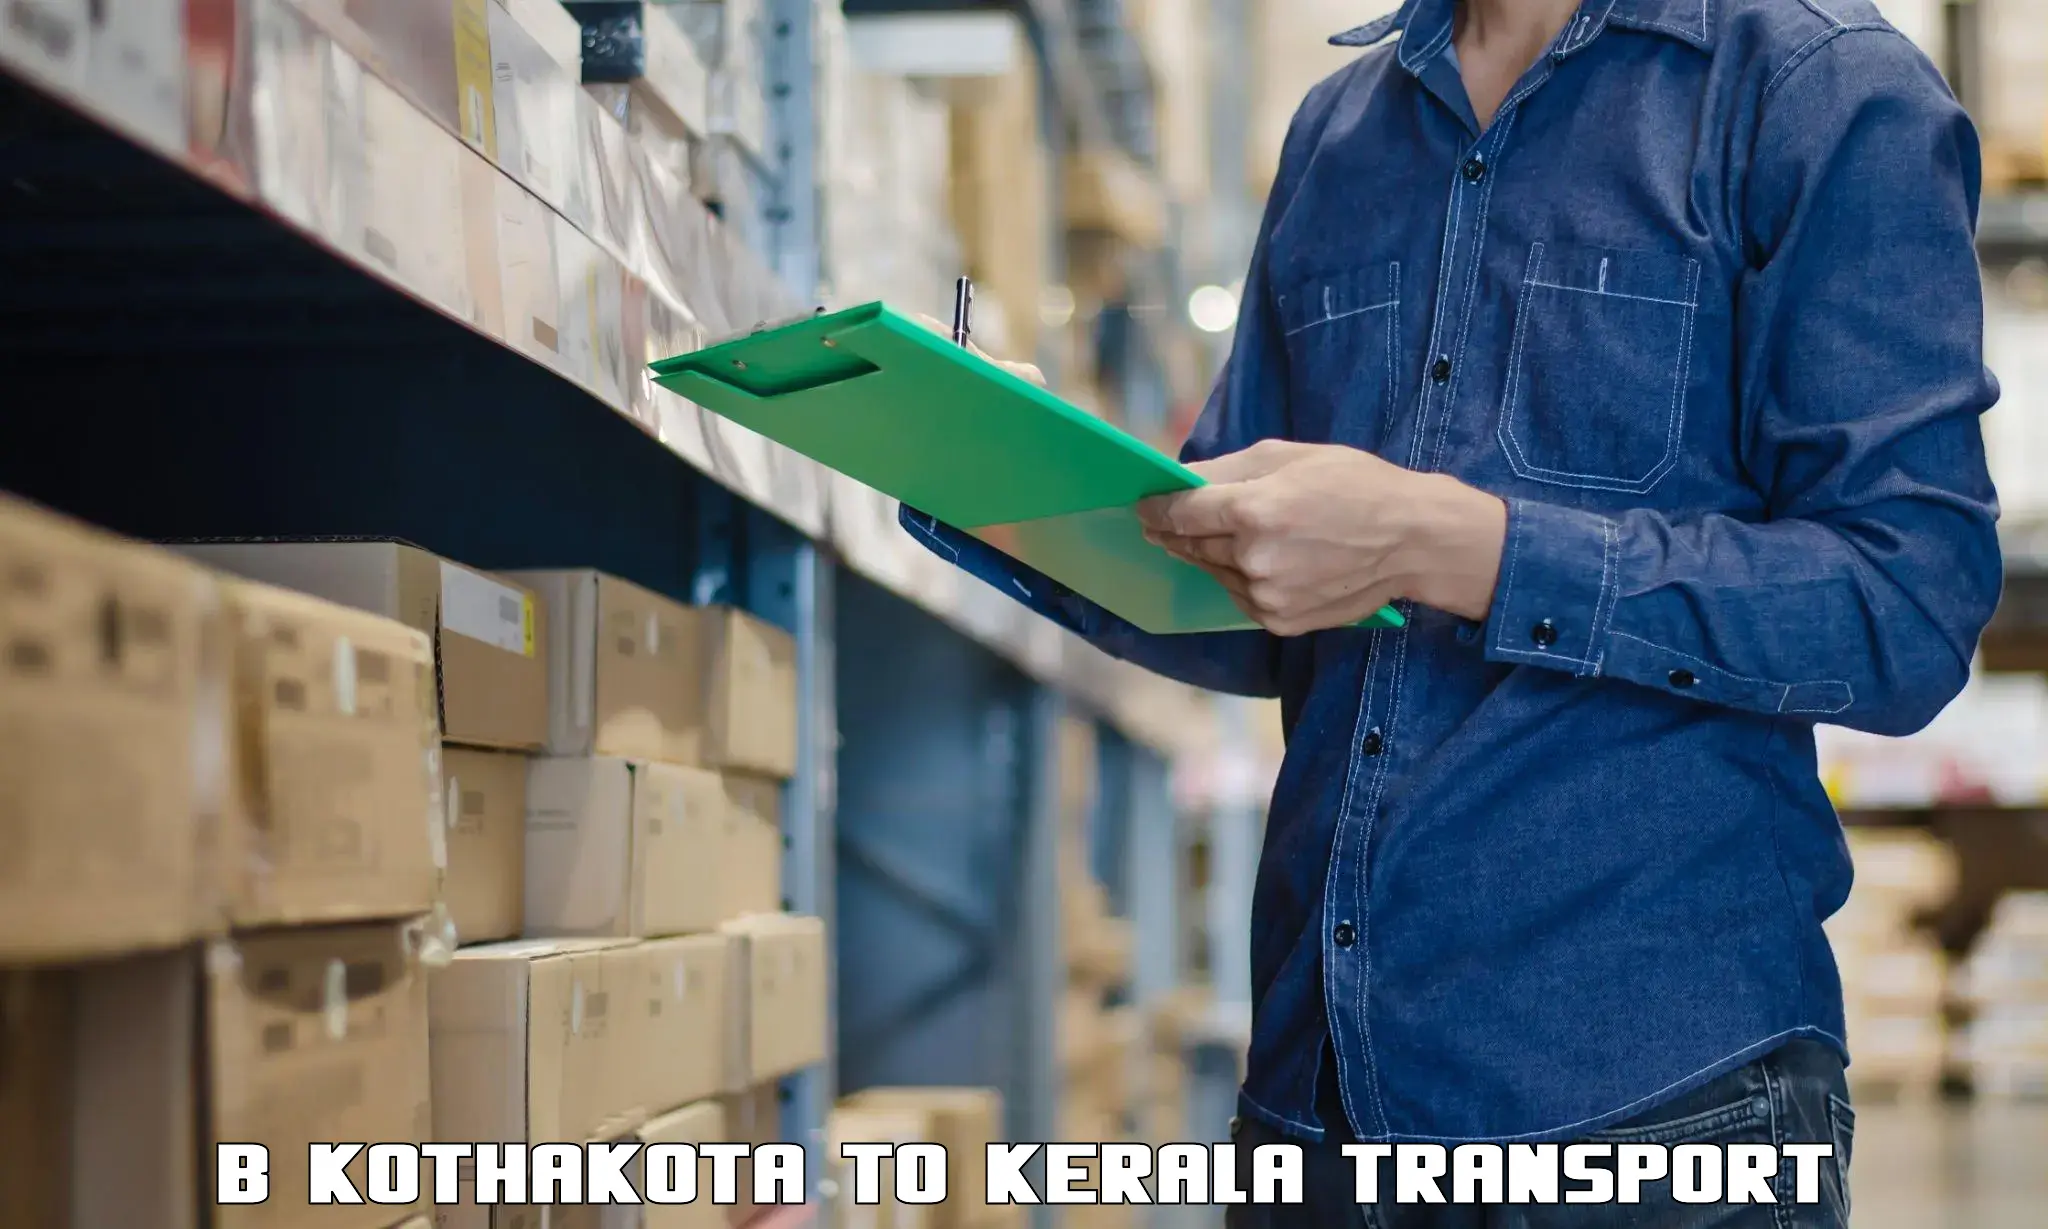 Goods transport services B Kothakota to Kochi